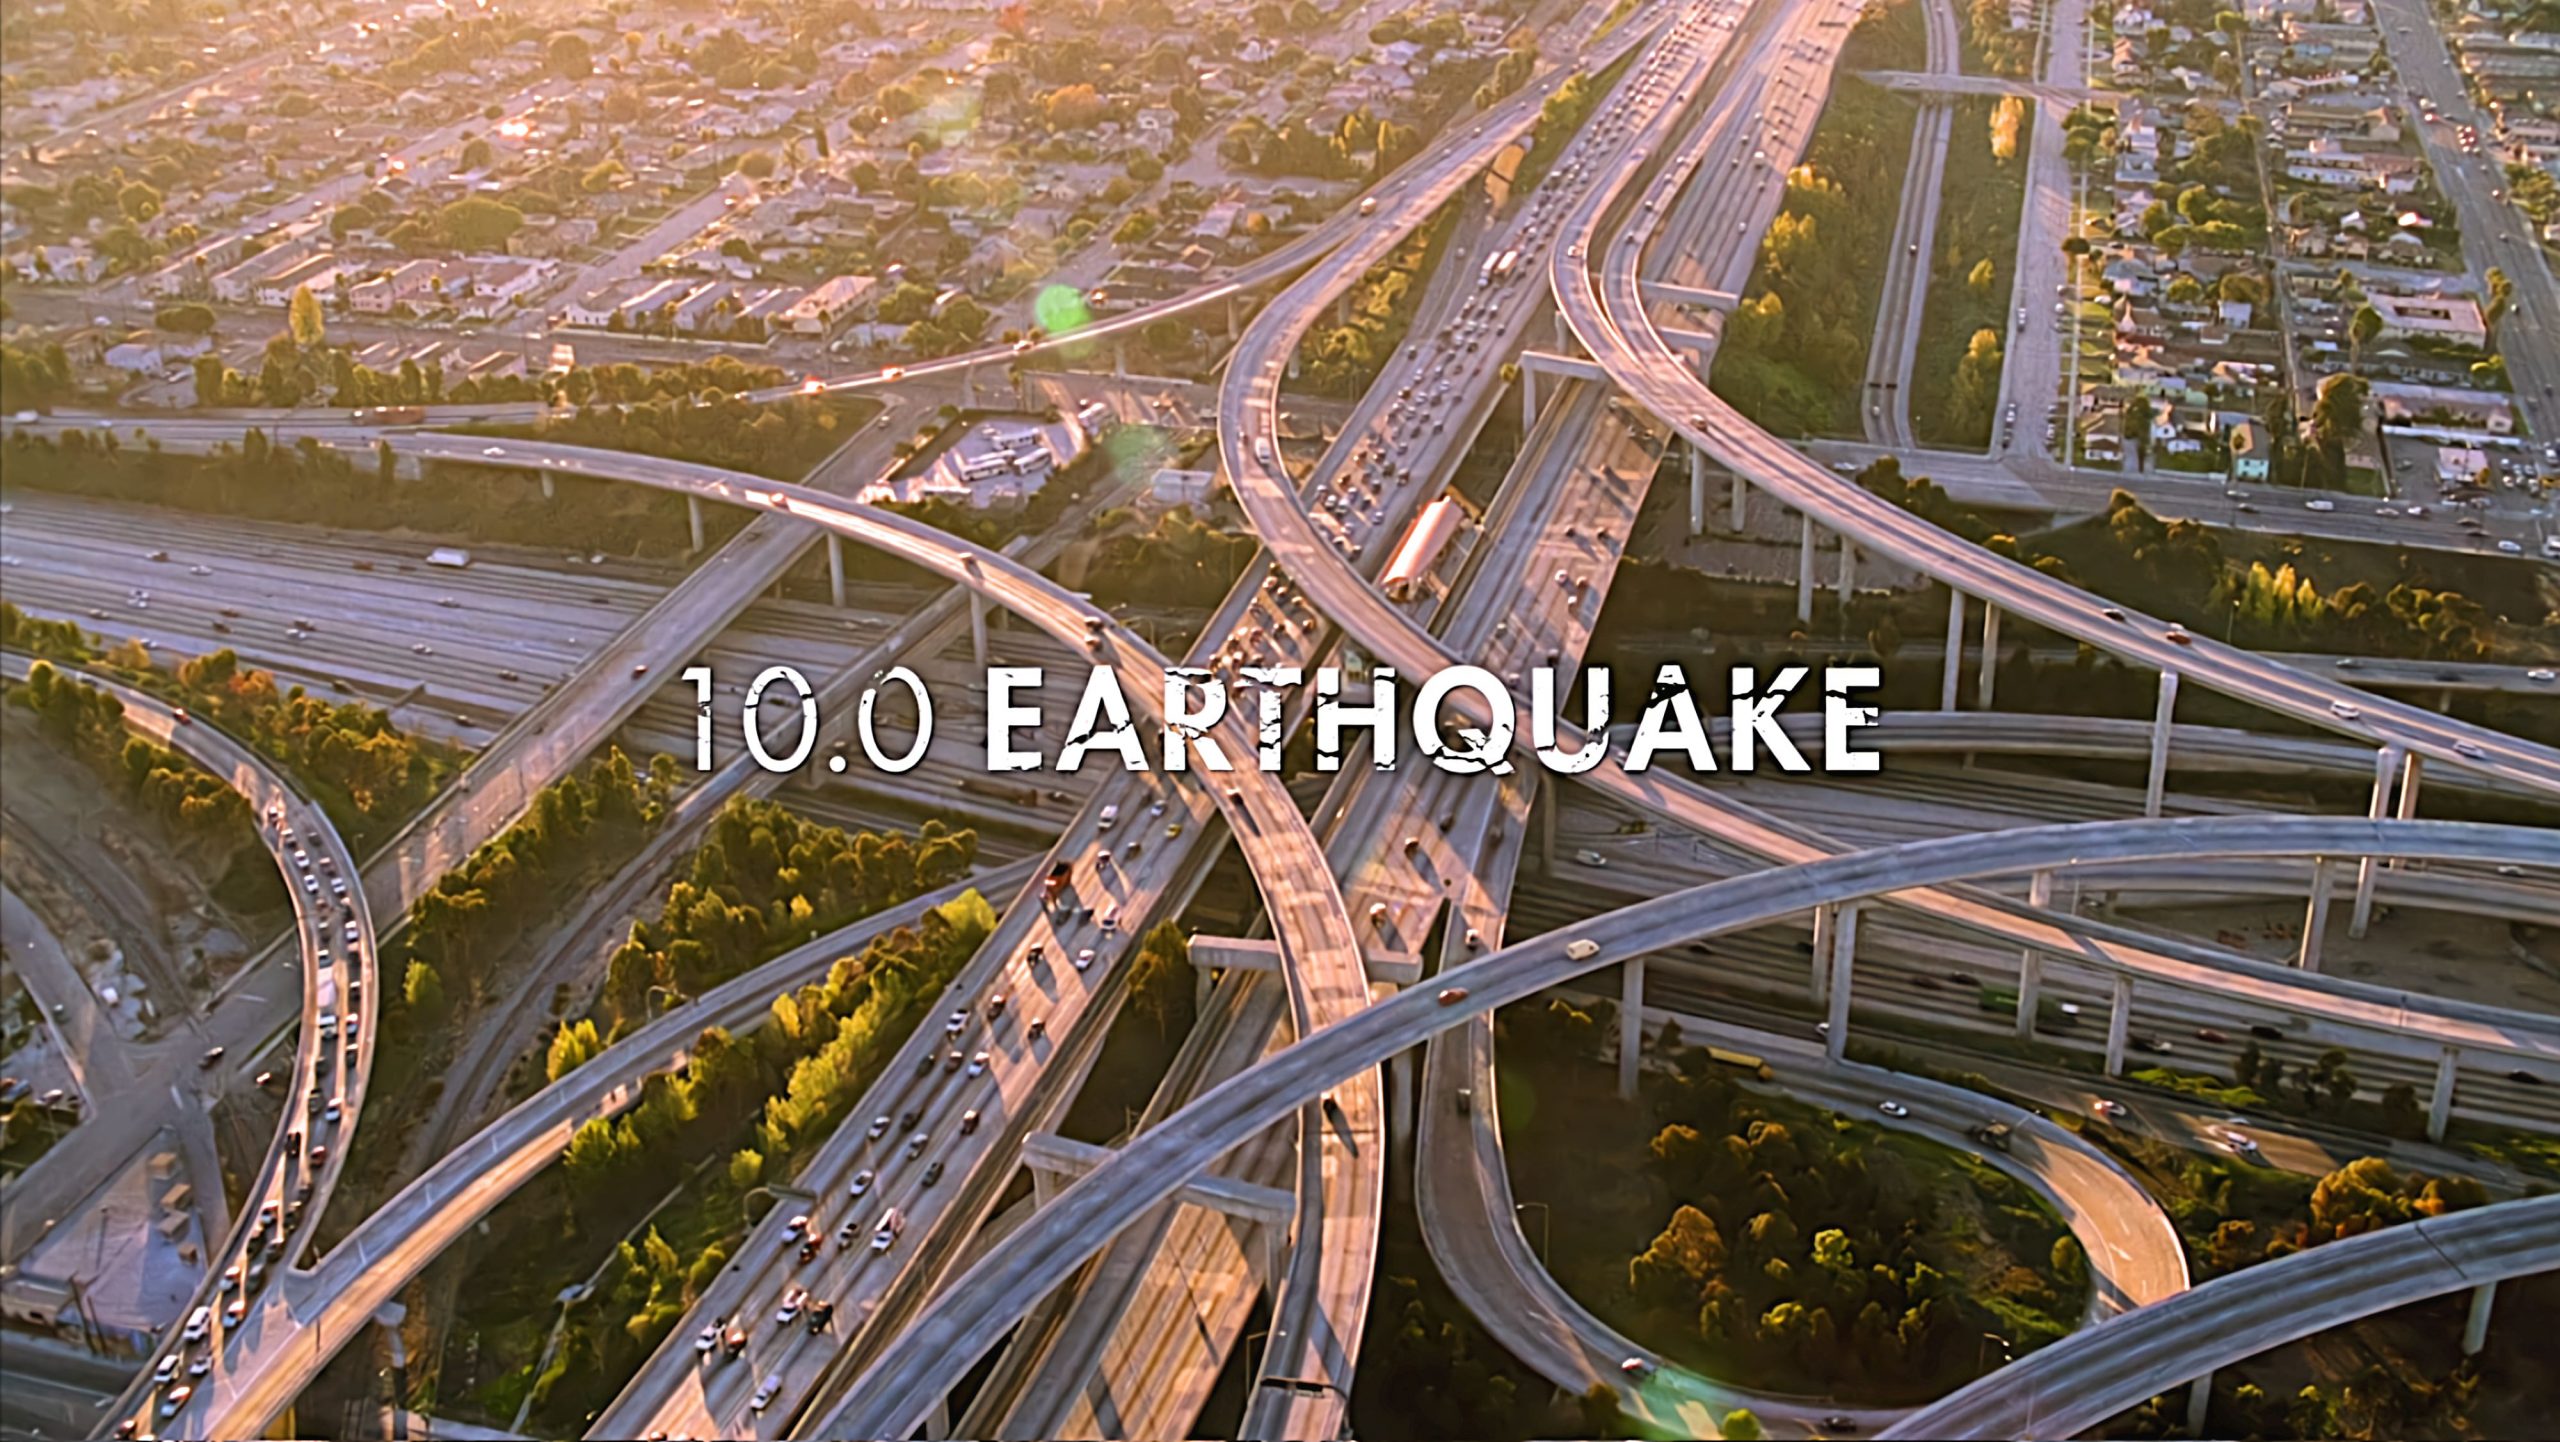 10-Earthquake-2015-17